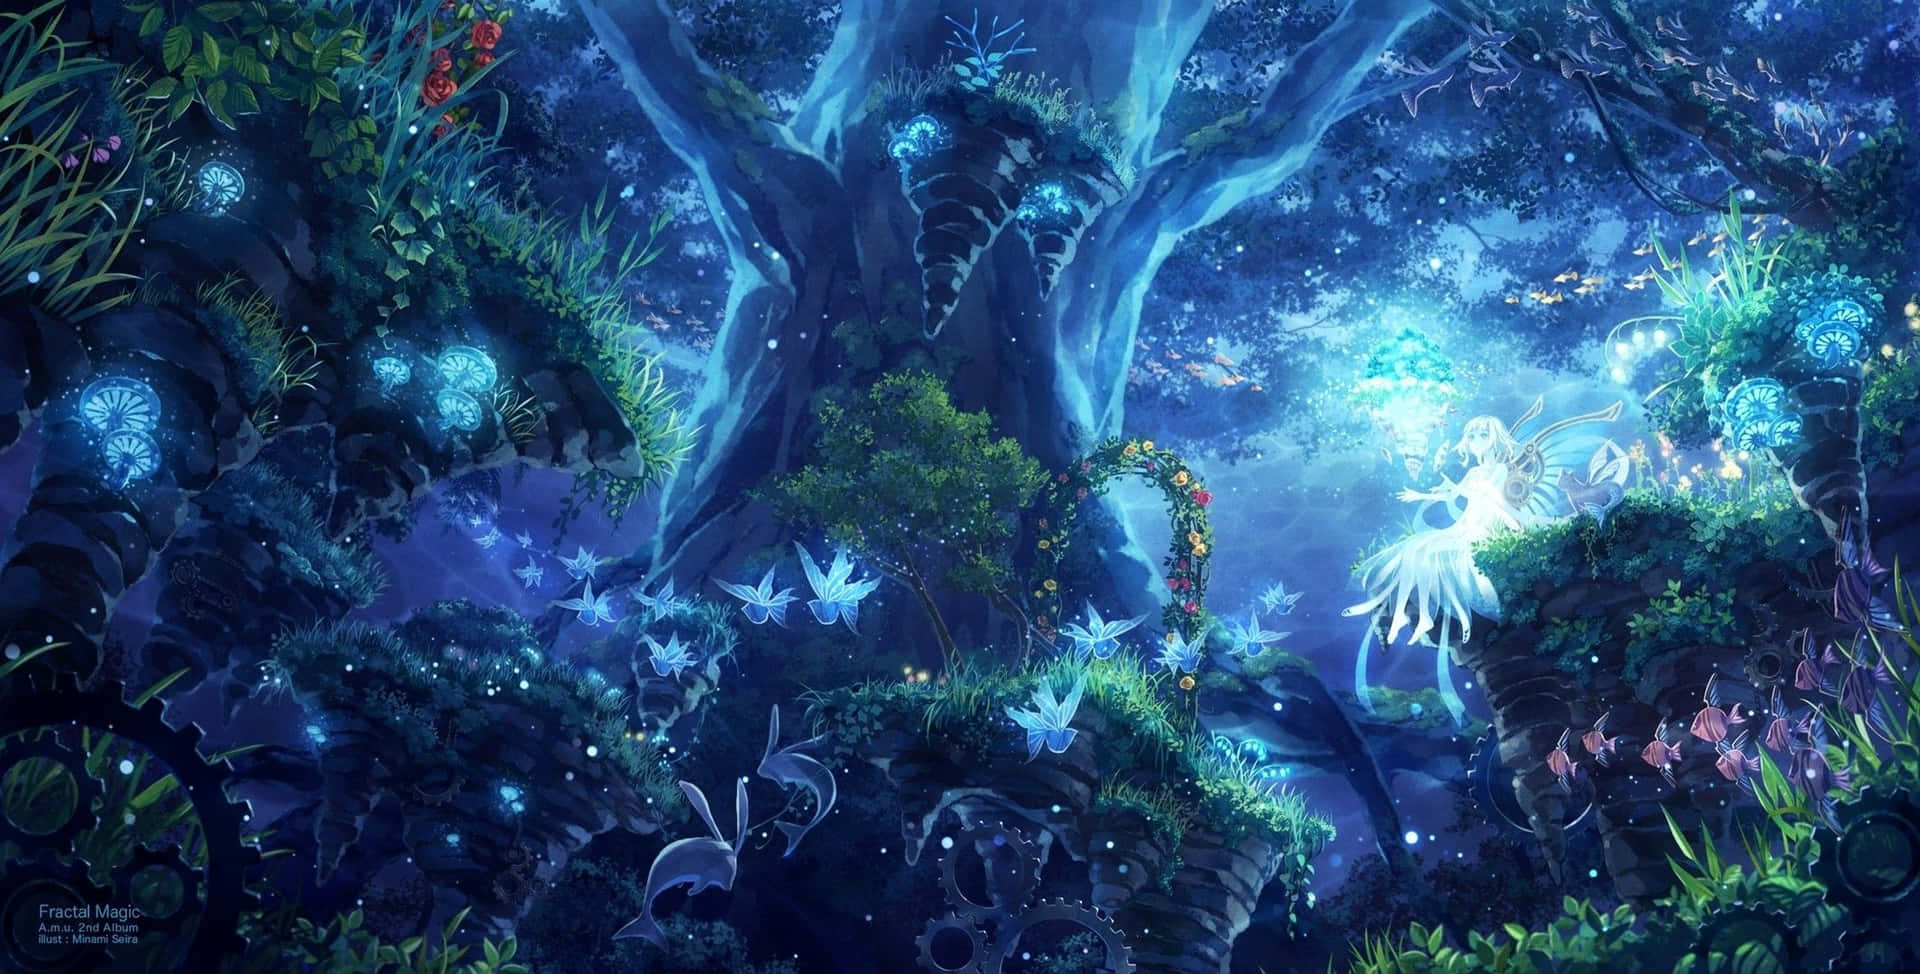 Njutav Naturens Skönhet I Denna Förtrollande Anime-skog